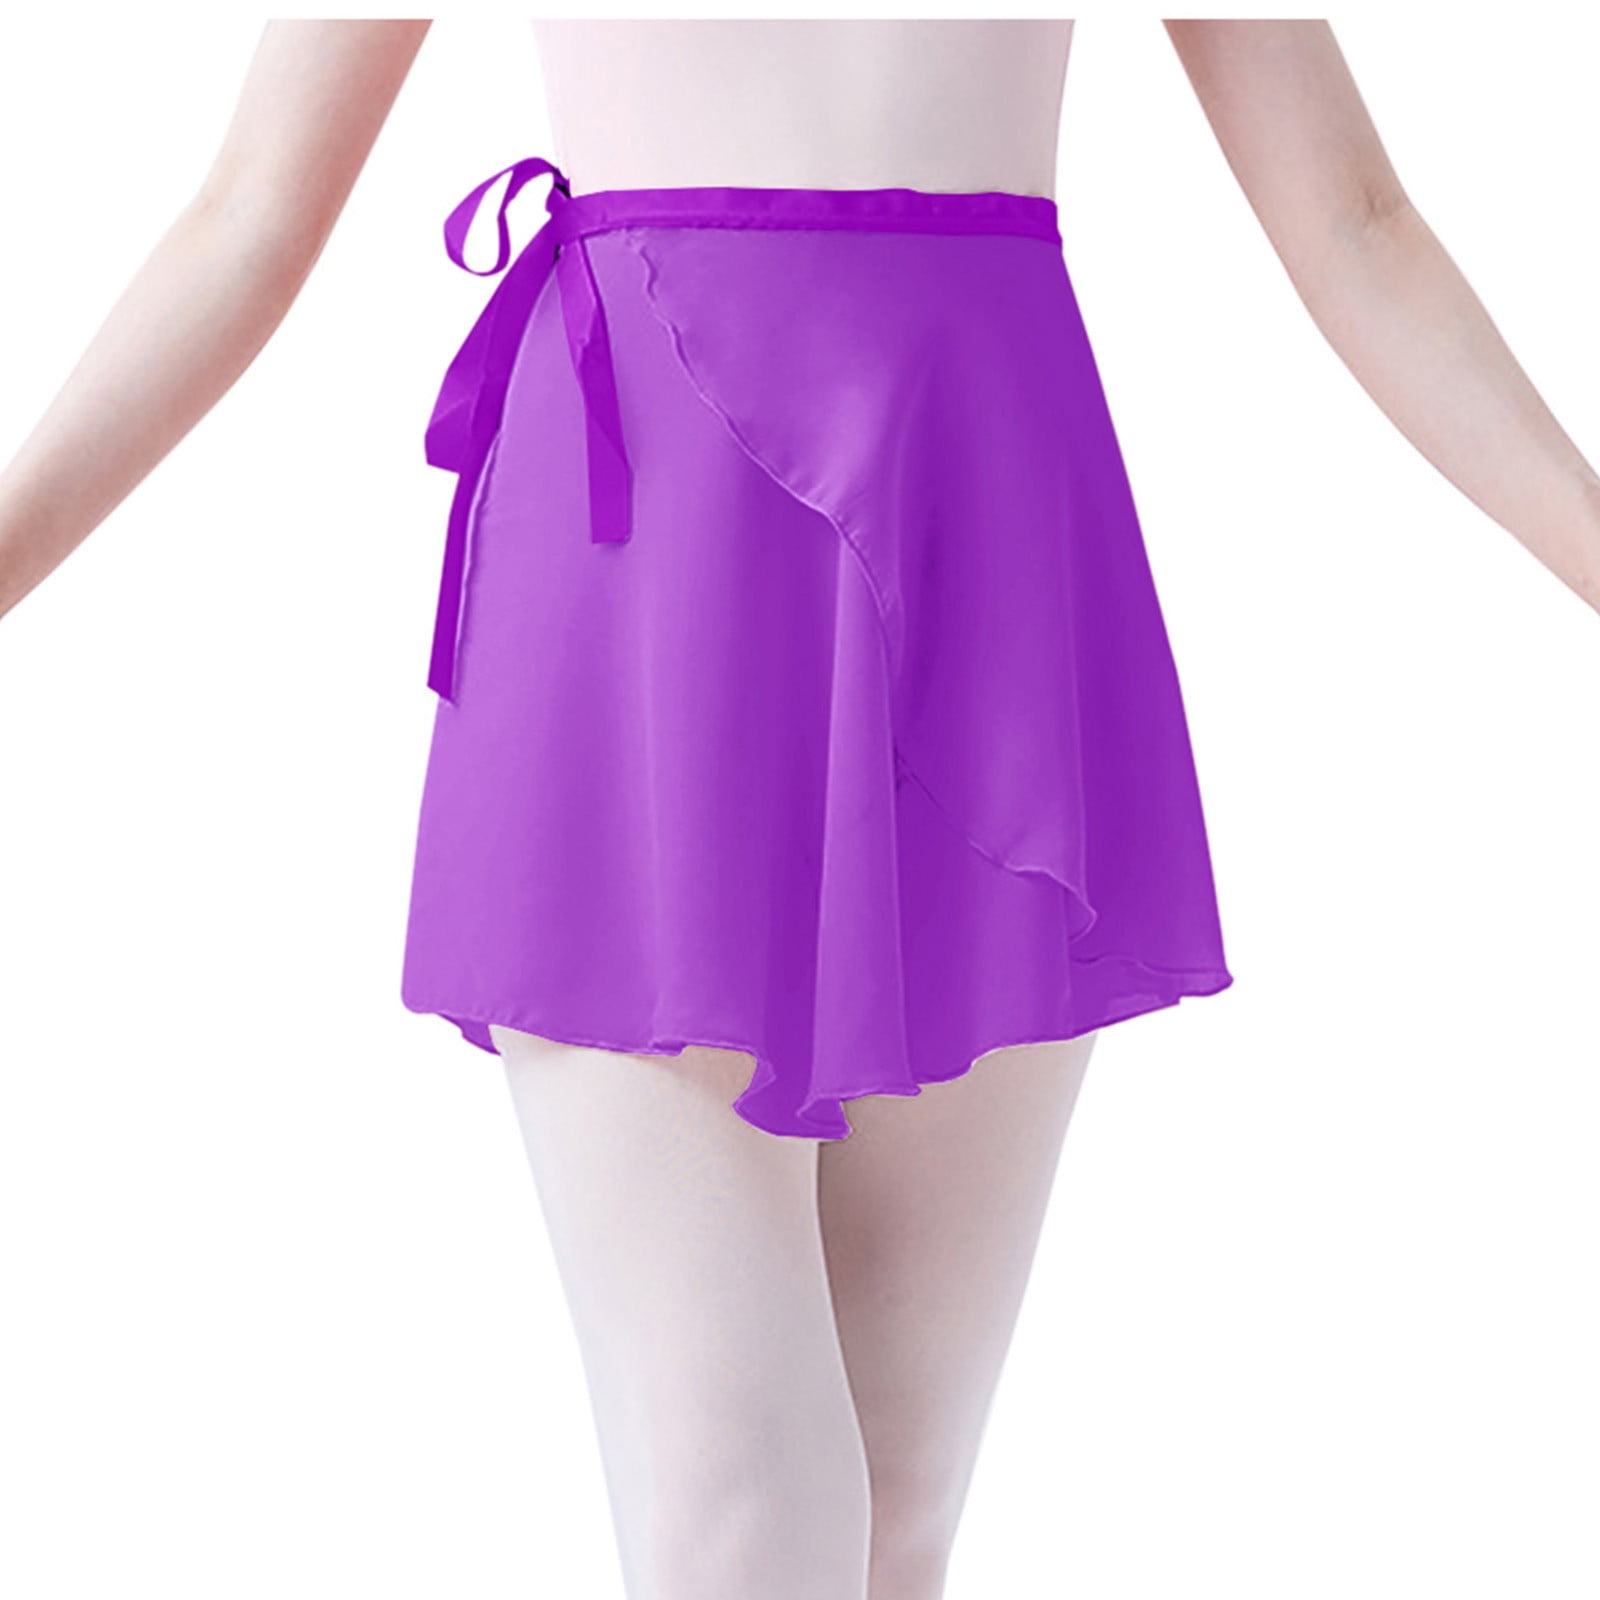 LAIVNEI Dresses for Women Skirt Fashion Women Mesh Casual High Waist ...